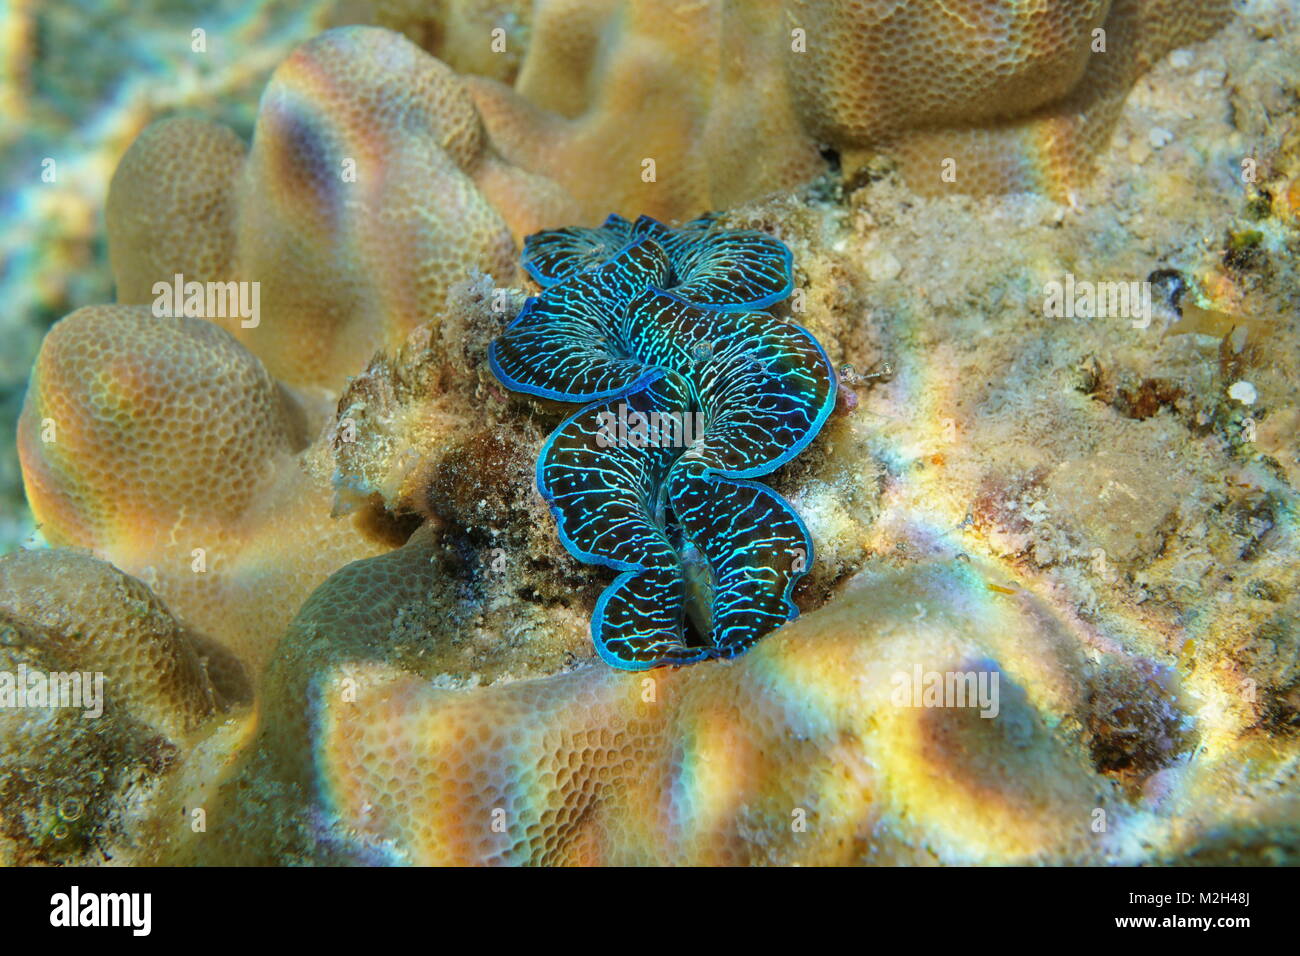 Un molusco azul maxima clam, Tridacna maxima, submarino en el océano Pacífico, Rarotonga, Islas Cook Foto de stock